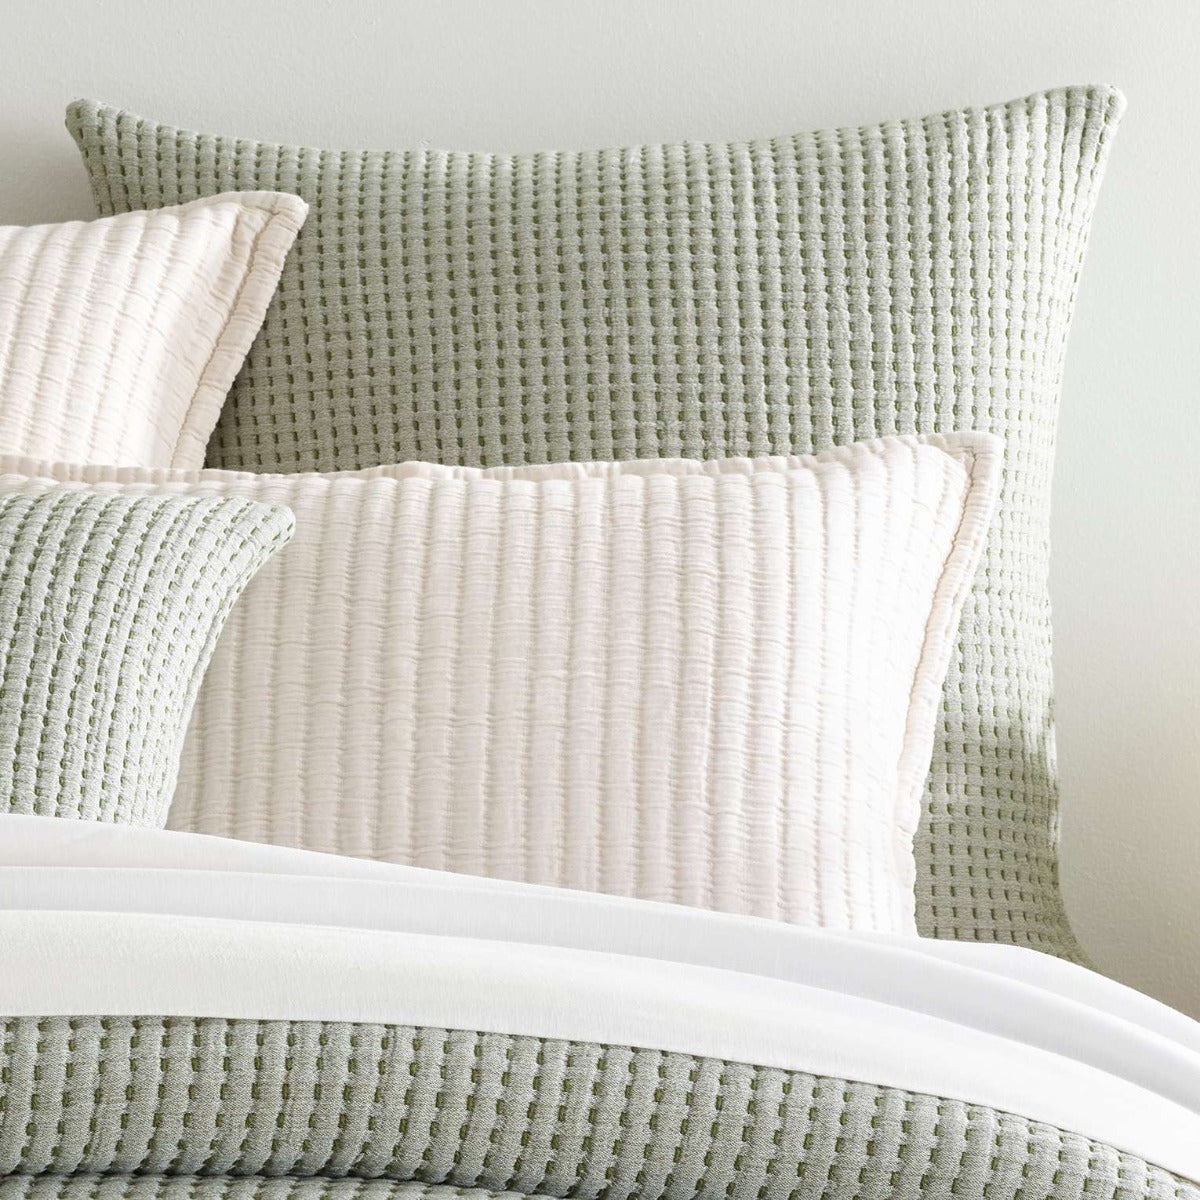 Pick Stitch Evergreen Matelasse Sham styled with white bedding. Styled view. 